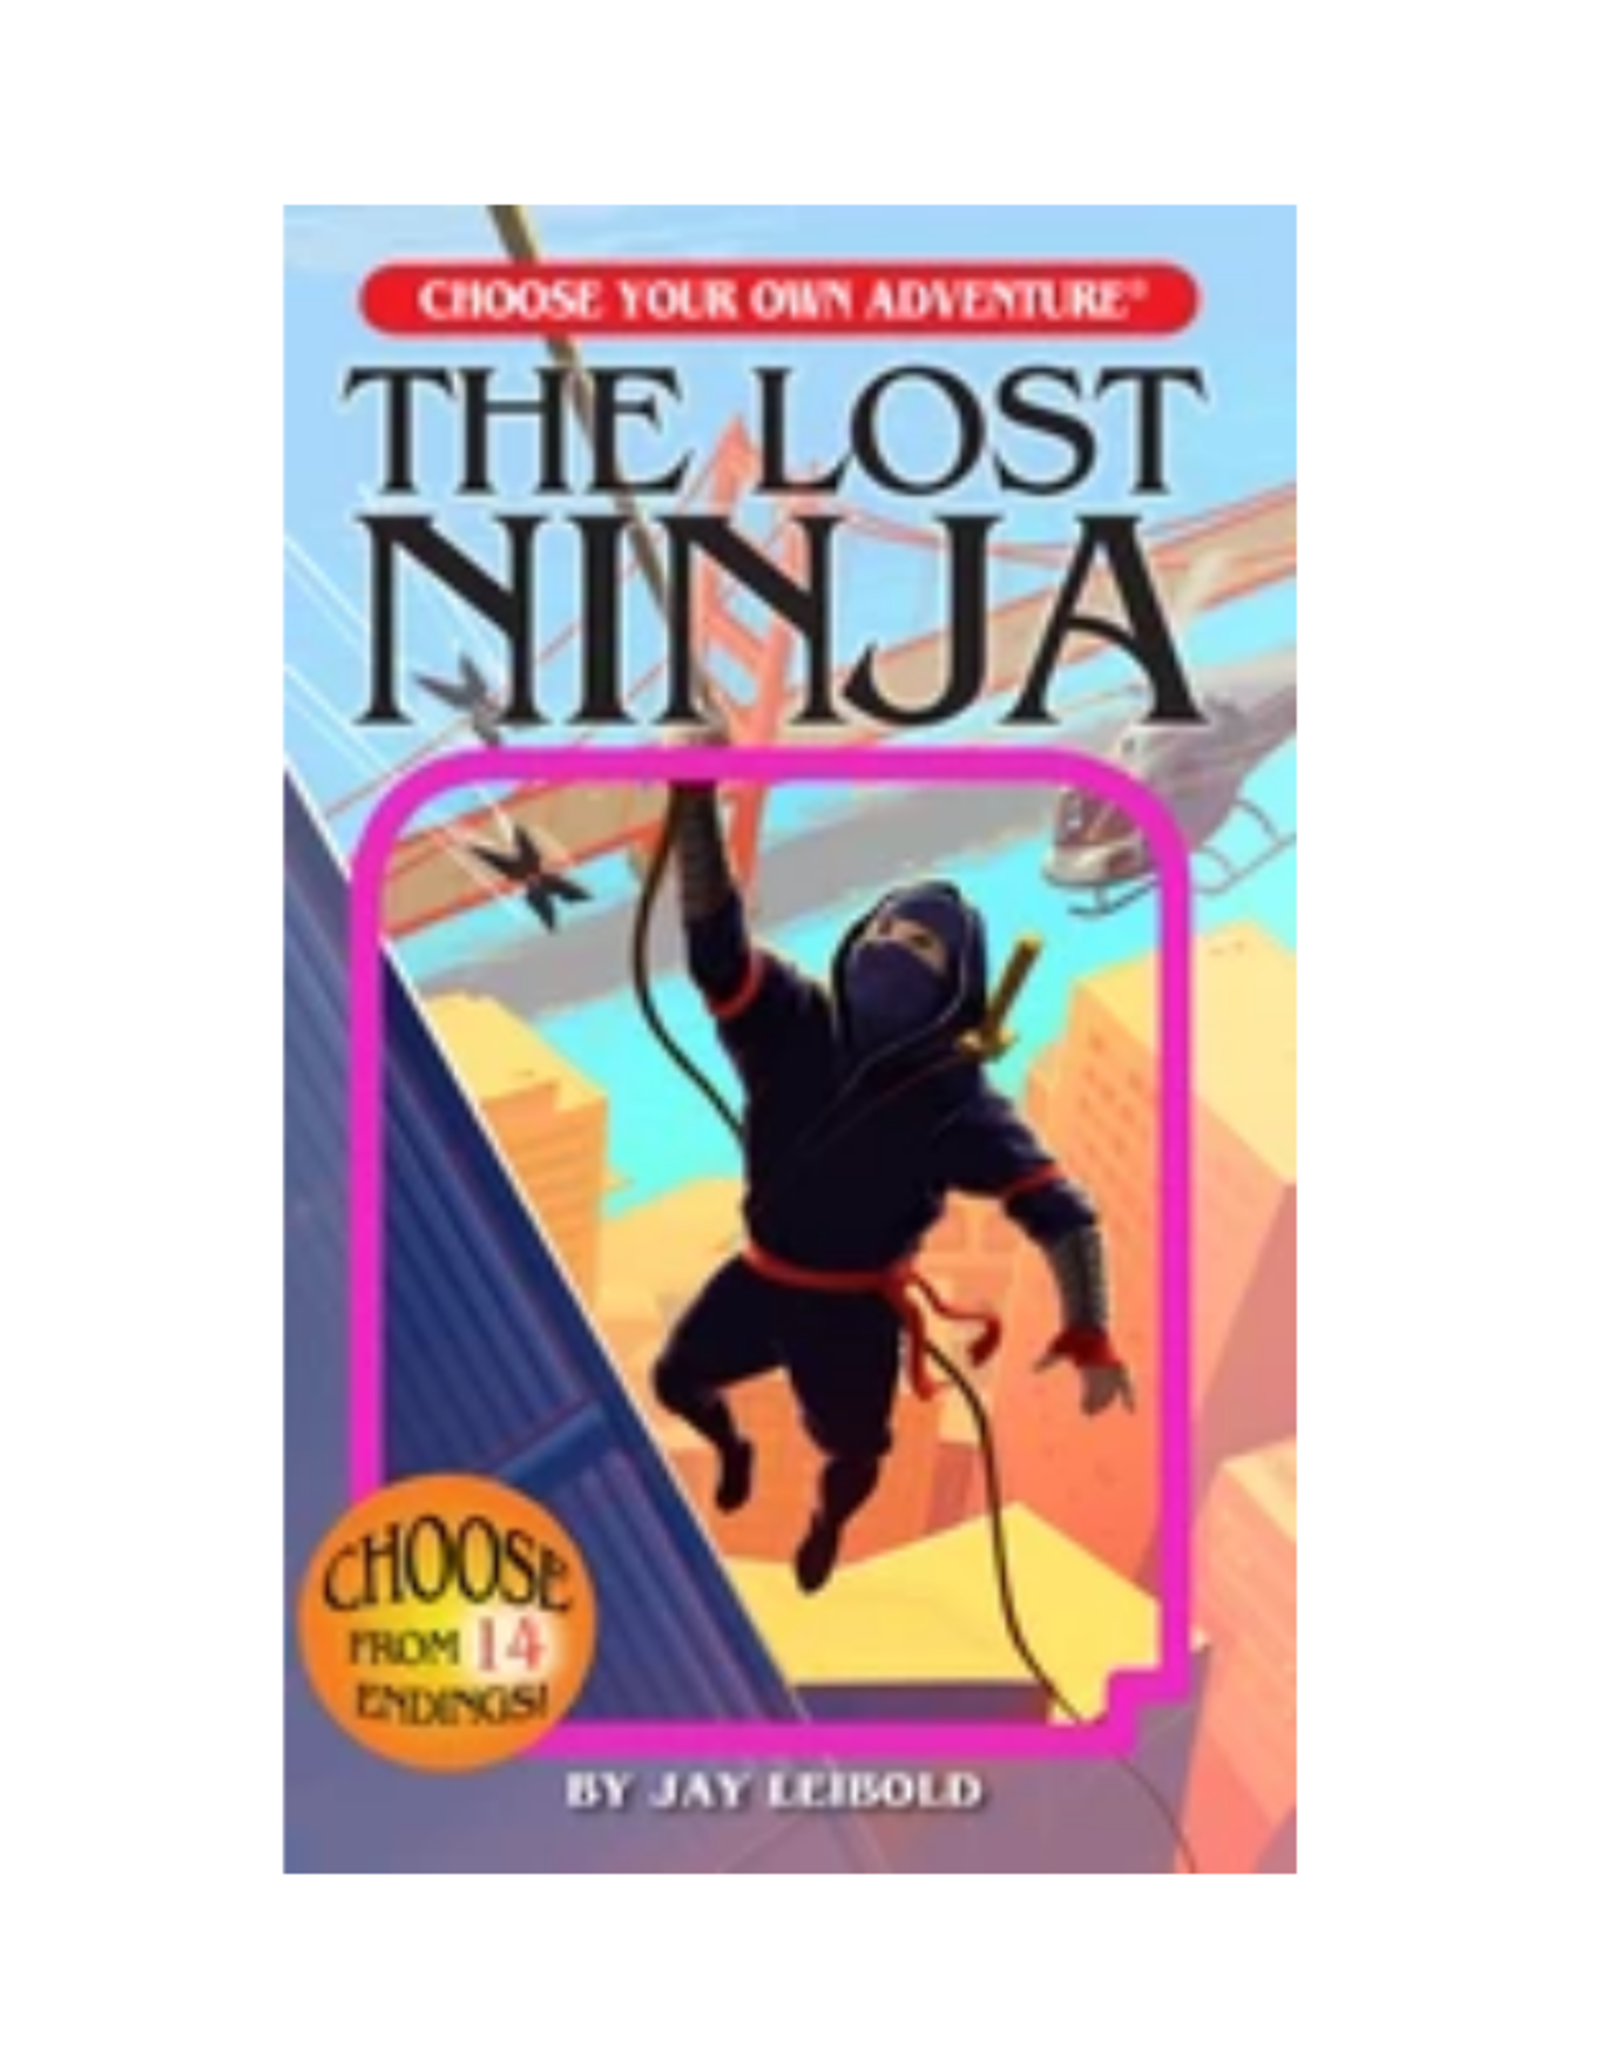 The Lost Ninja